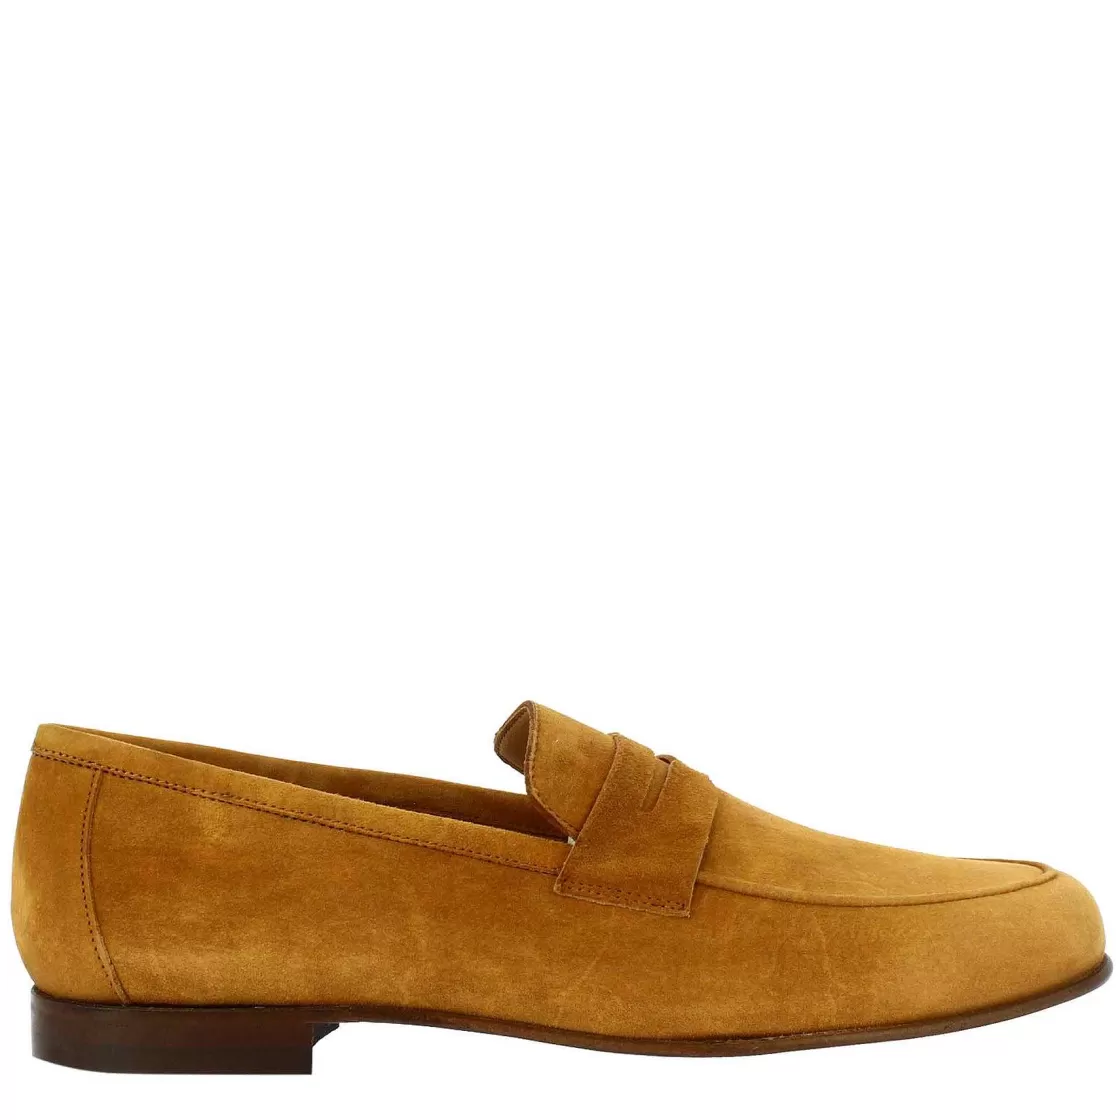 Leonardo Handmade Men'S Slip-On Loafers In Brown Suede Leather New